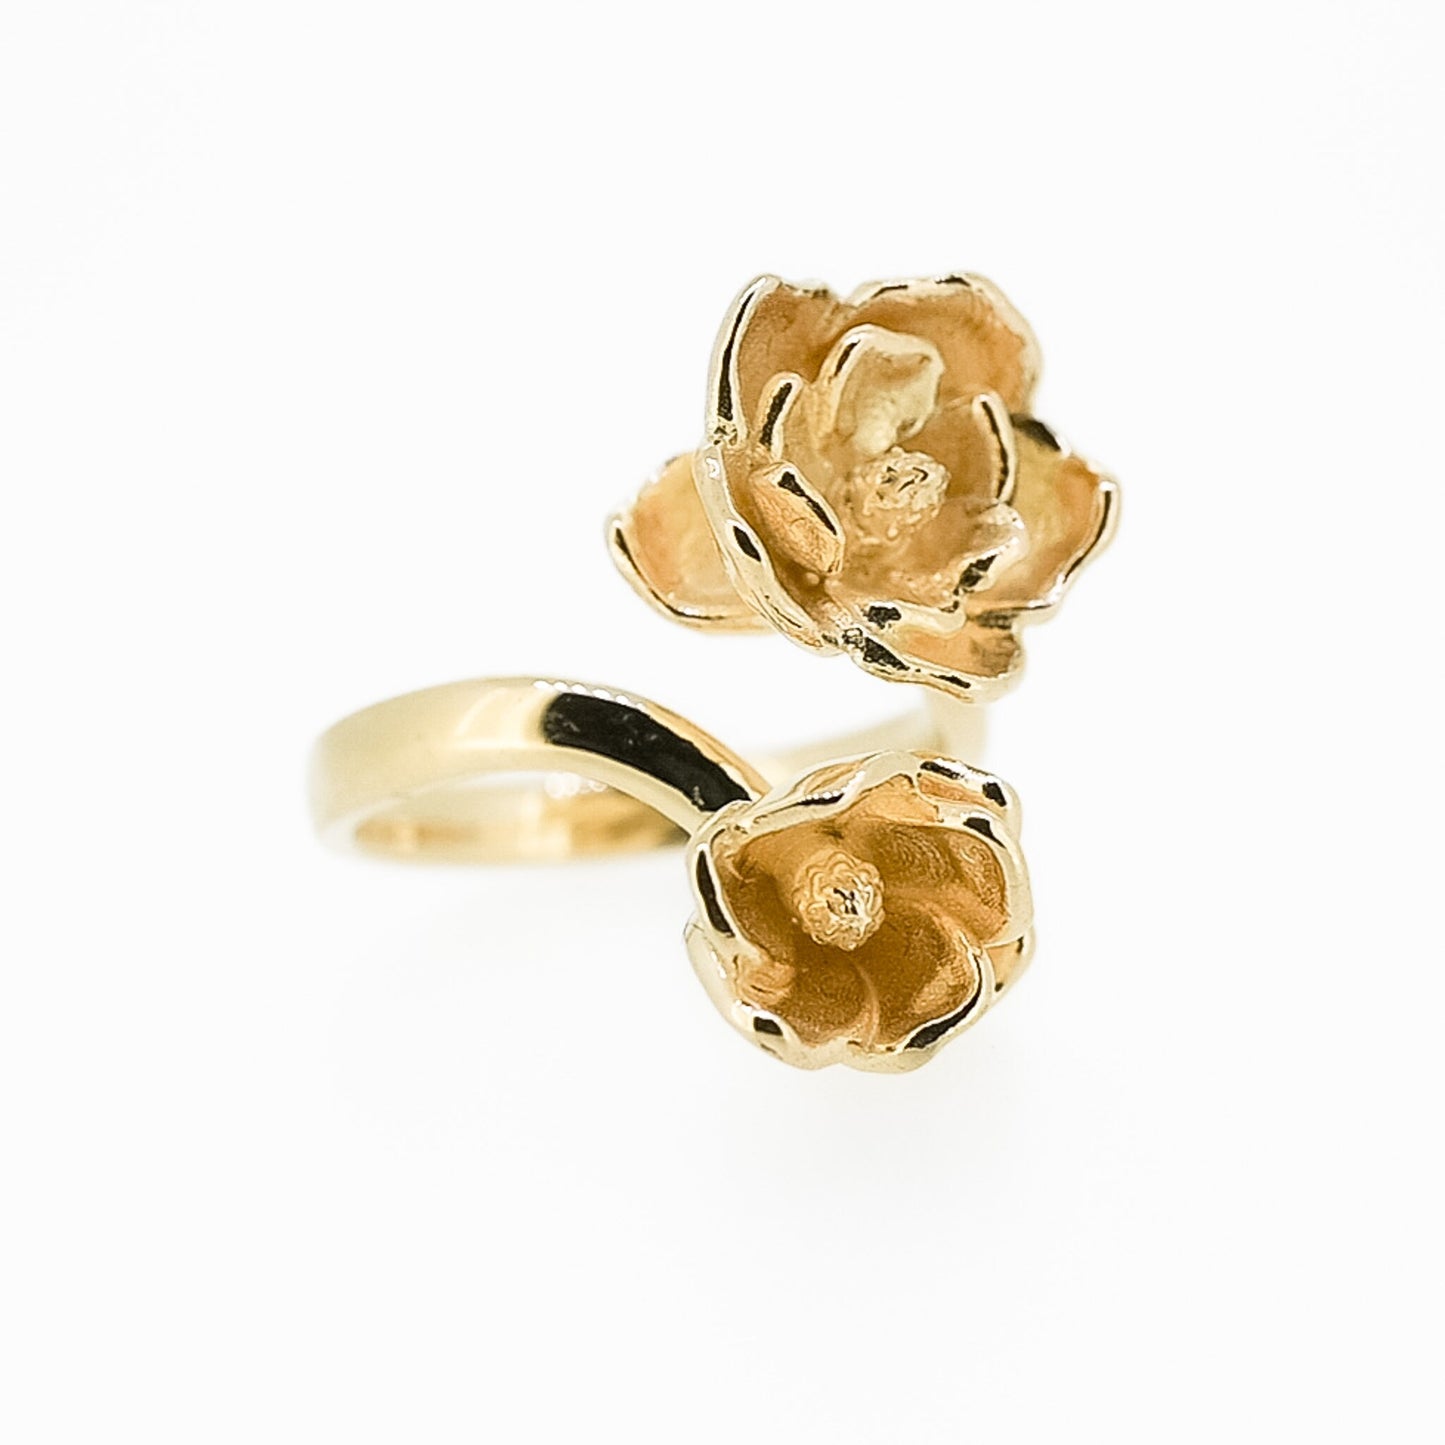 Magnolia Flower Ring, Adjustable Statement Ring in Sterling Silver, Vermeil, 18K Gold Plate